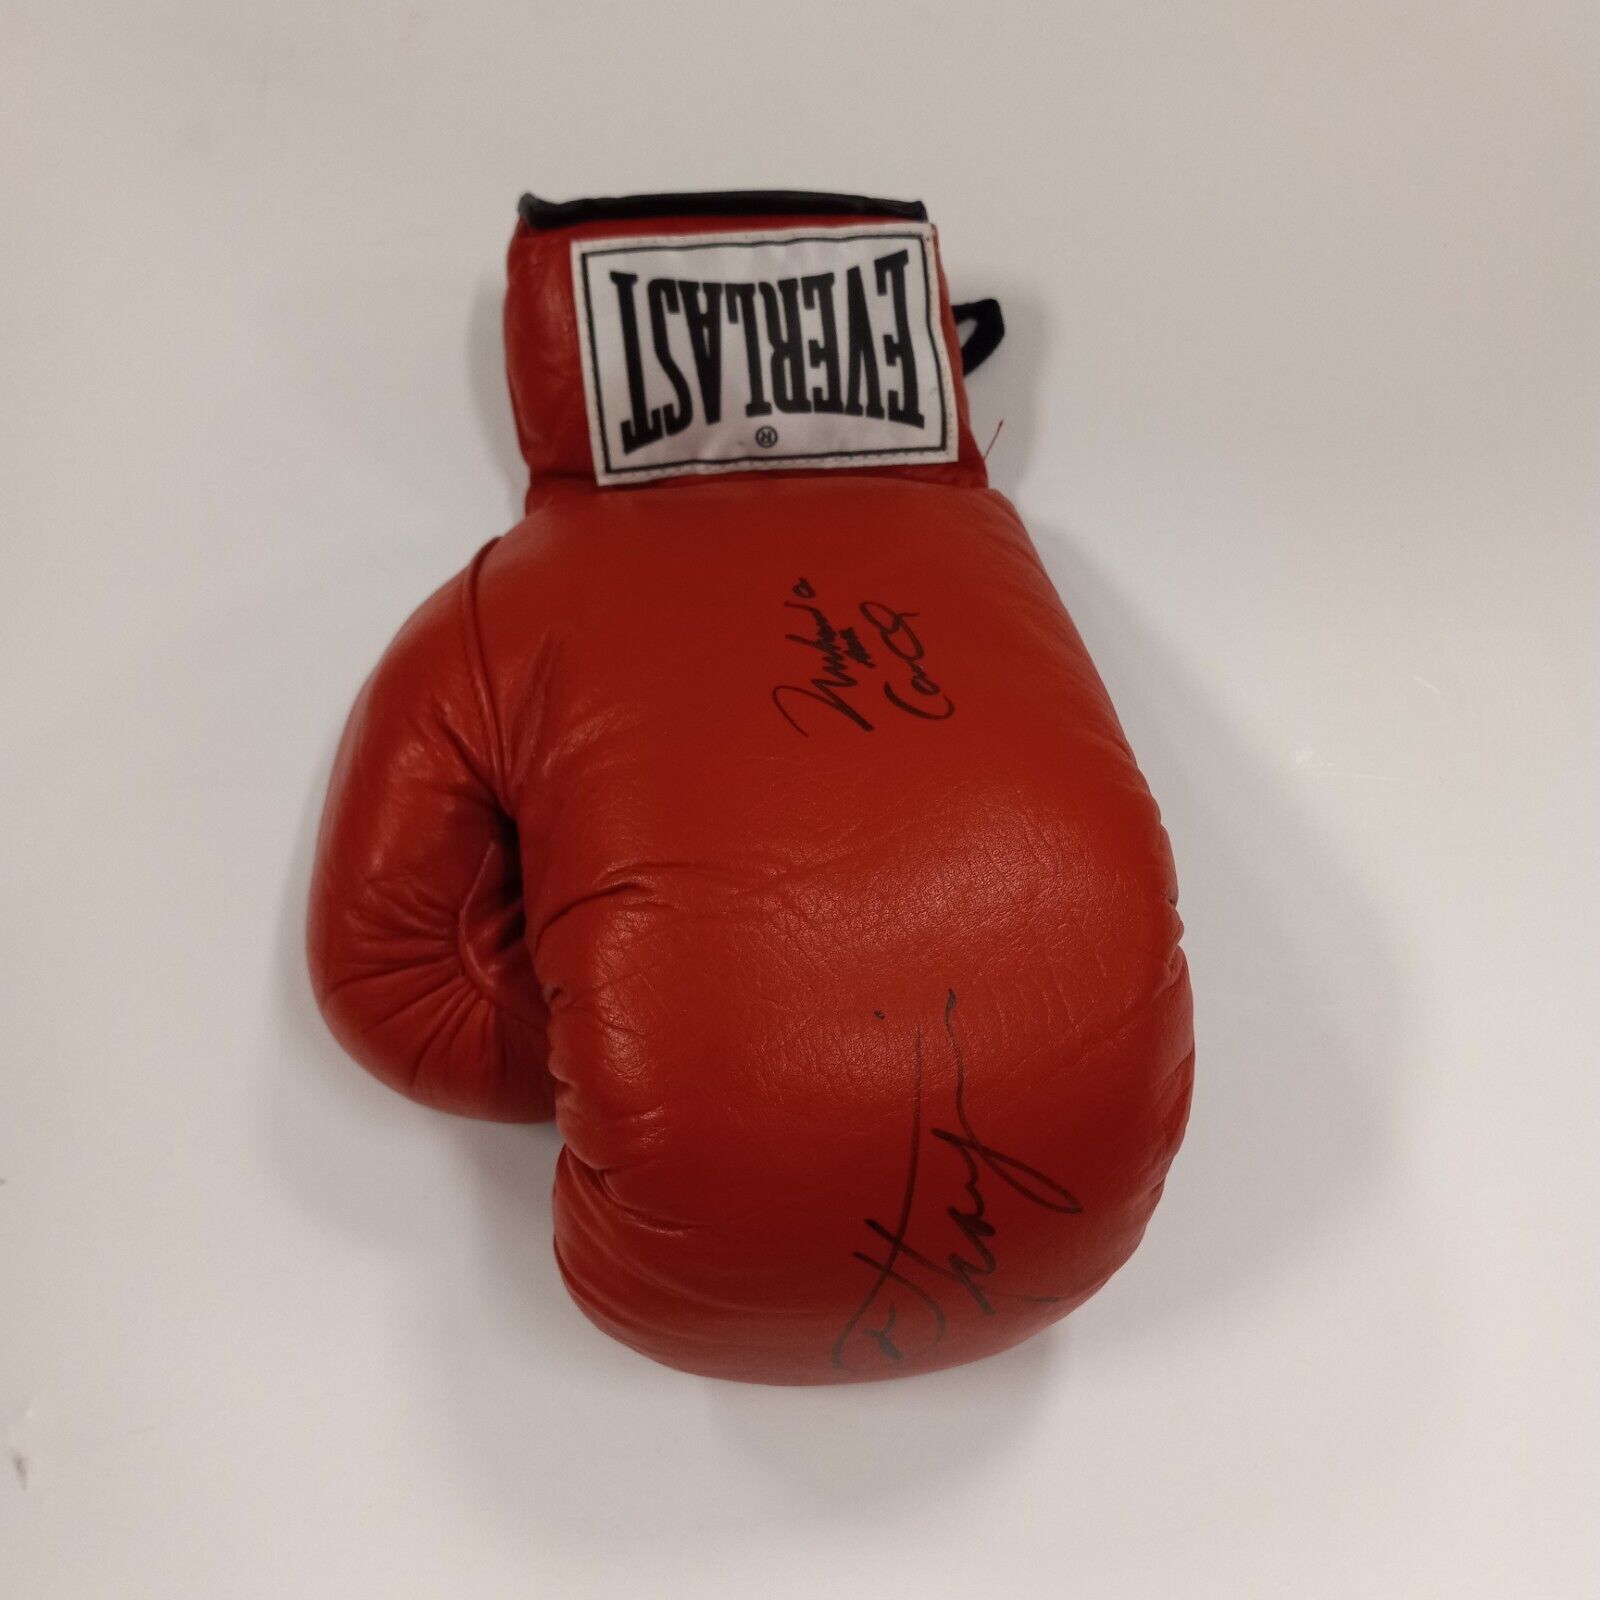  Dbl.Sign Muhammad Ali aka. Cassius Clay + Joe Frazier Boxing Glove Hand Signed 